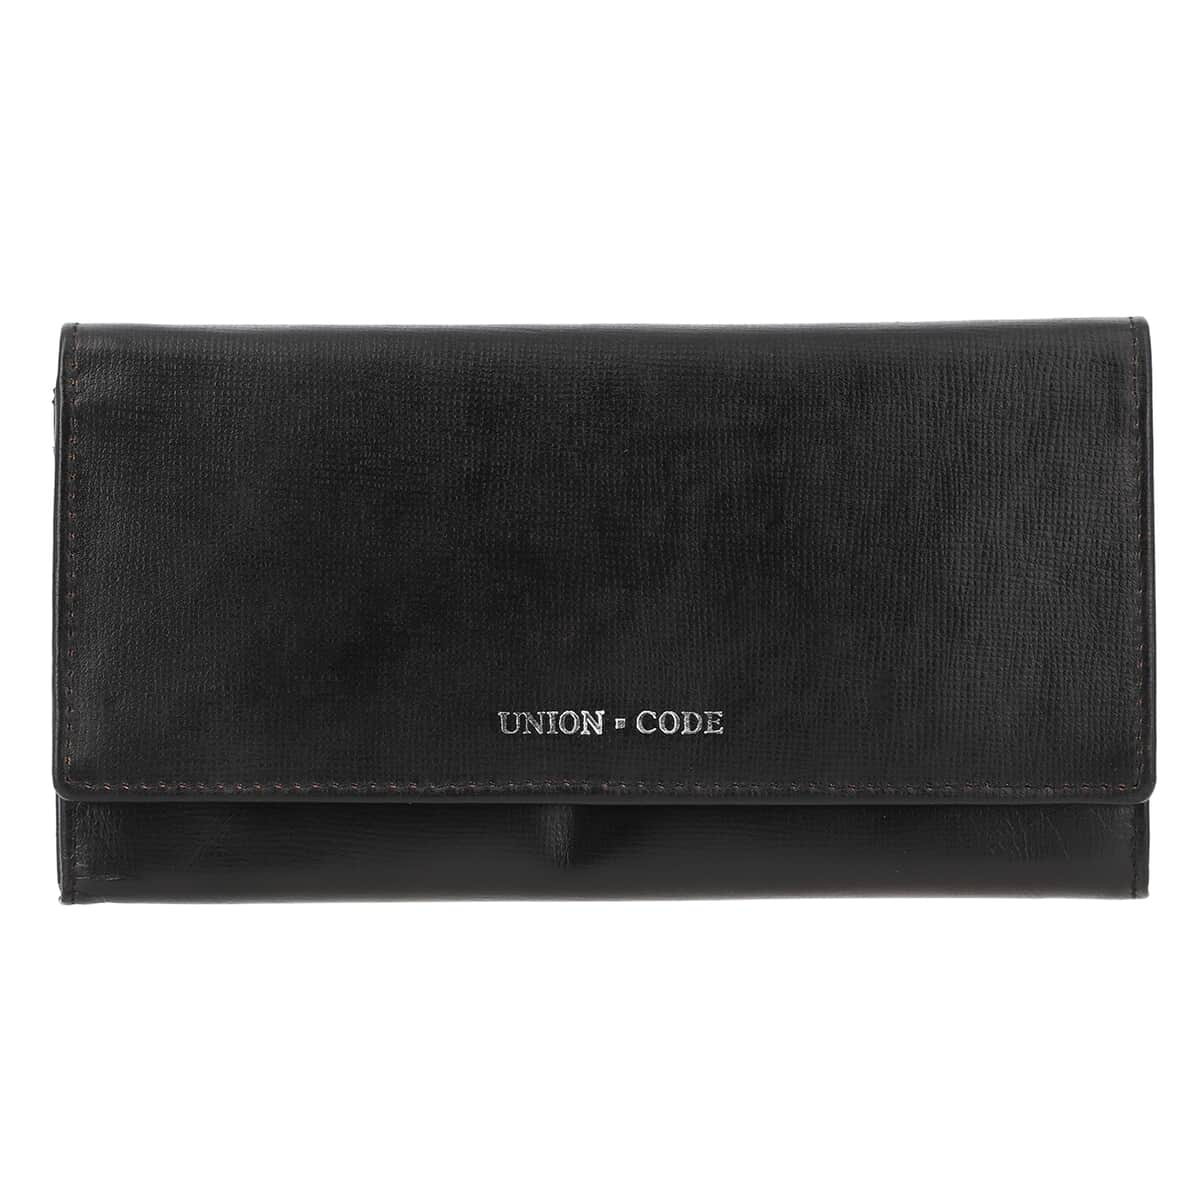 Union Code Black Genuine Leather RFID Women's Wallet image number 0